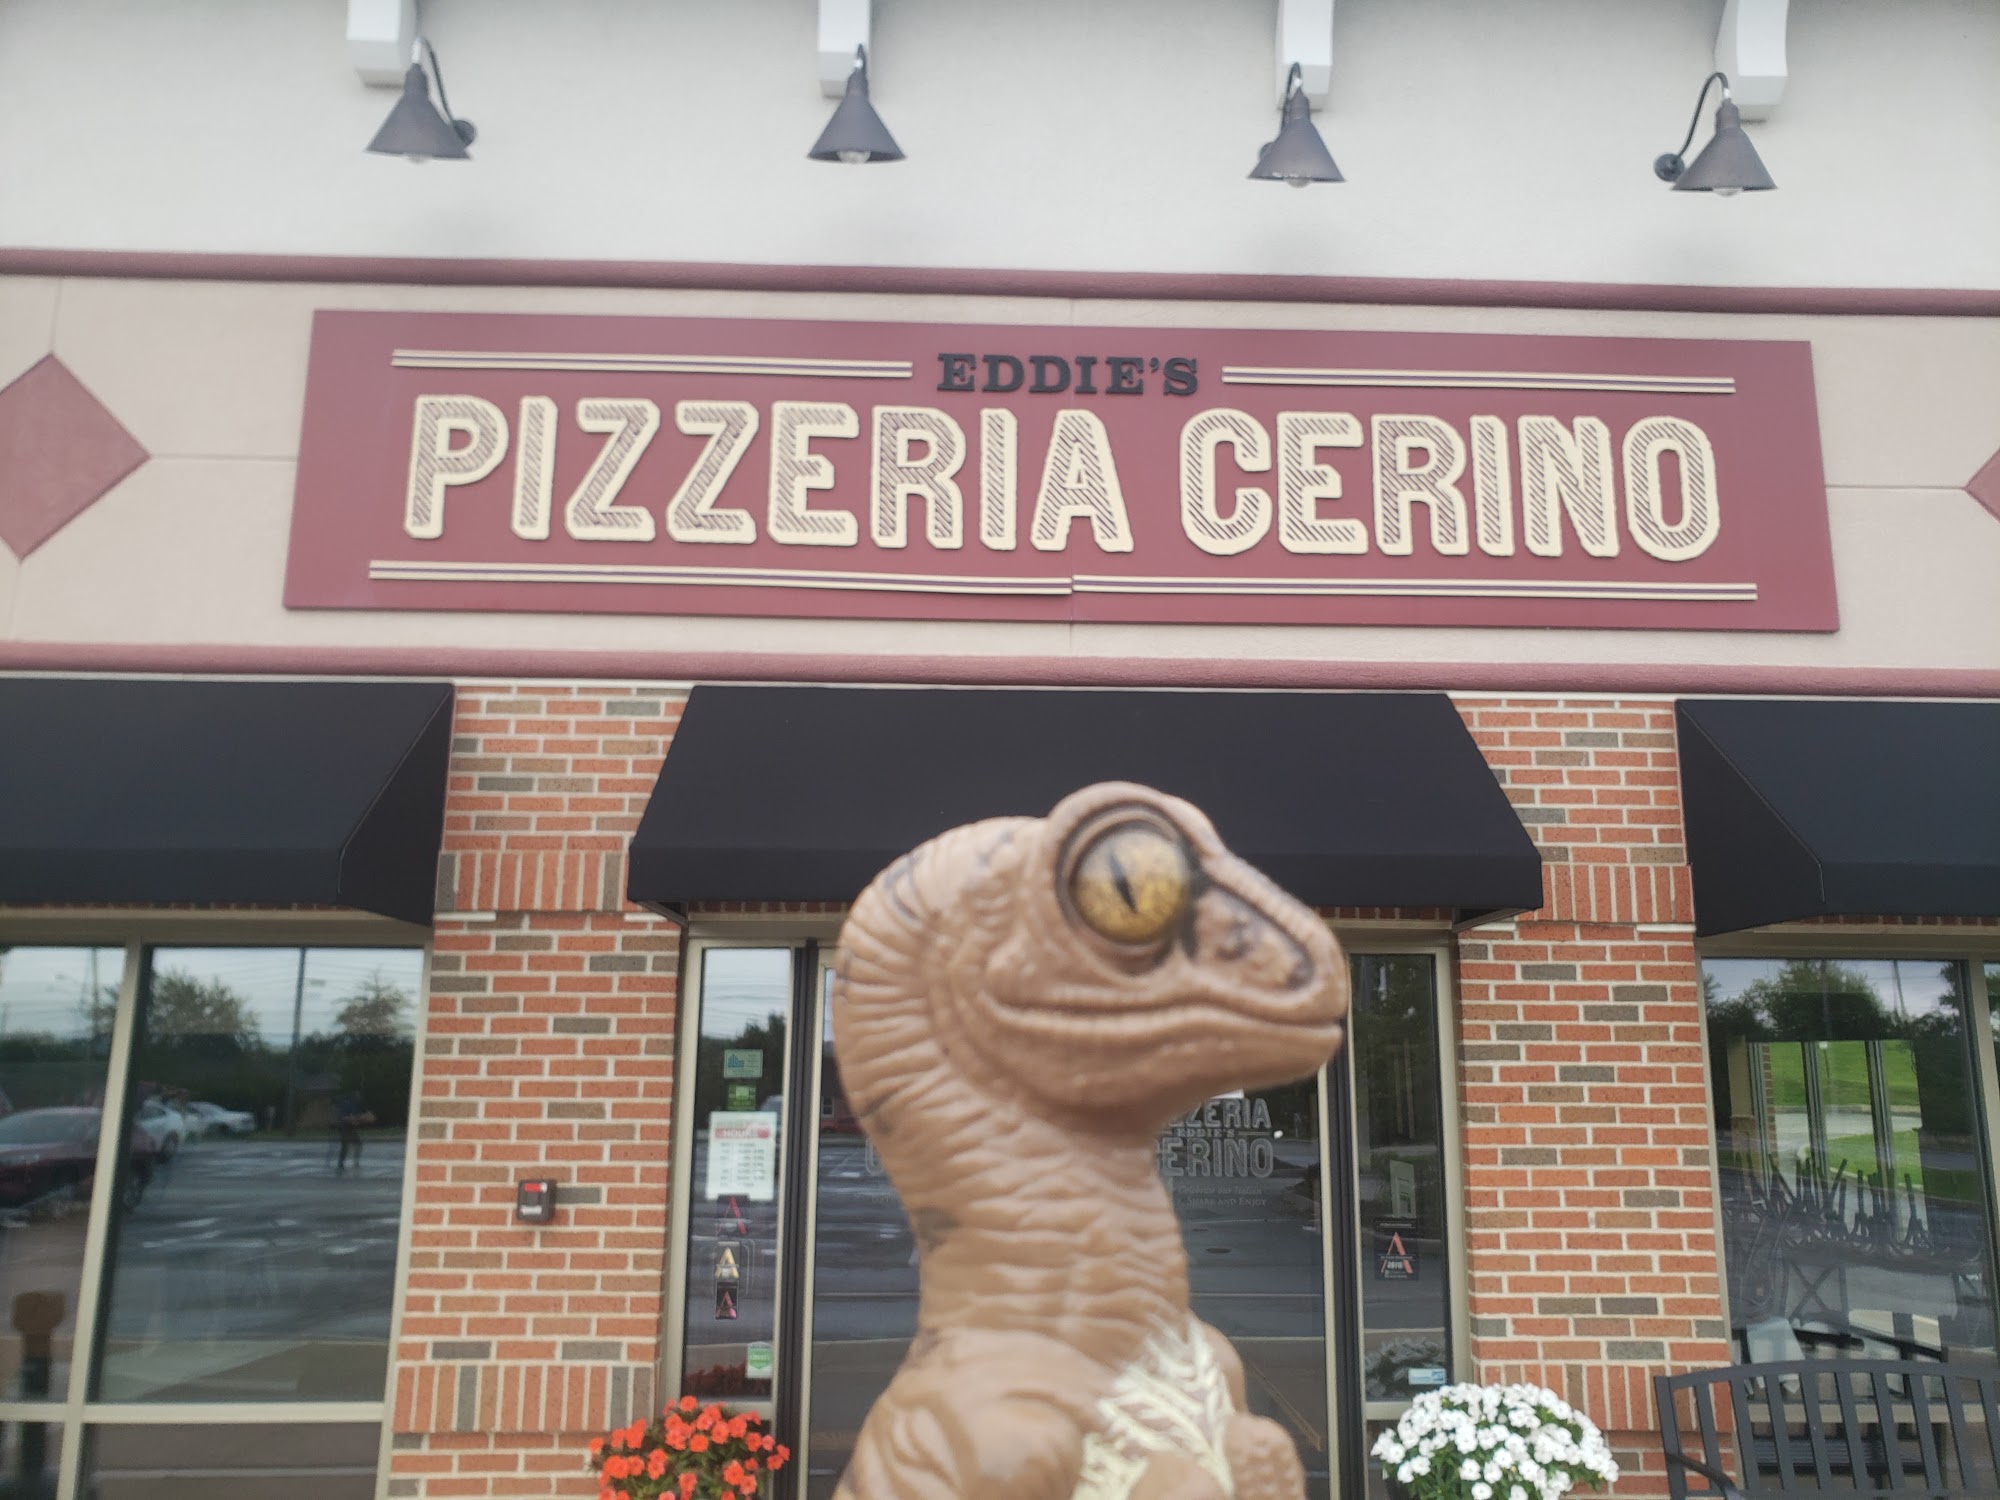 Eddie's Pizzeria Cerino